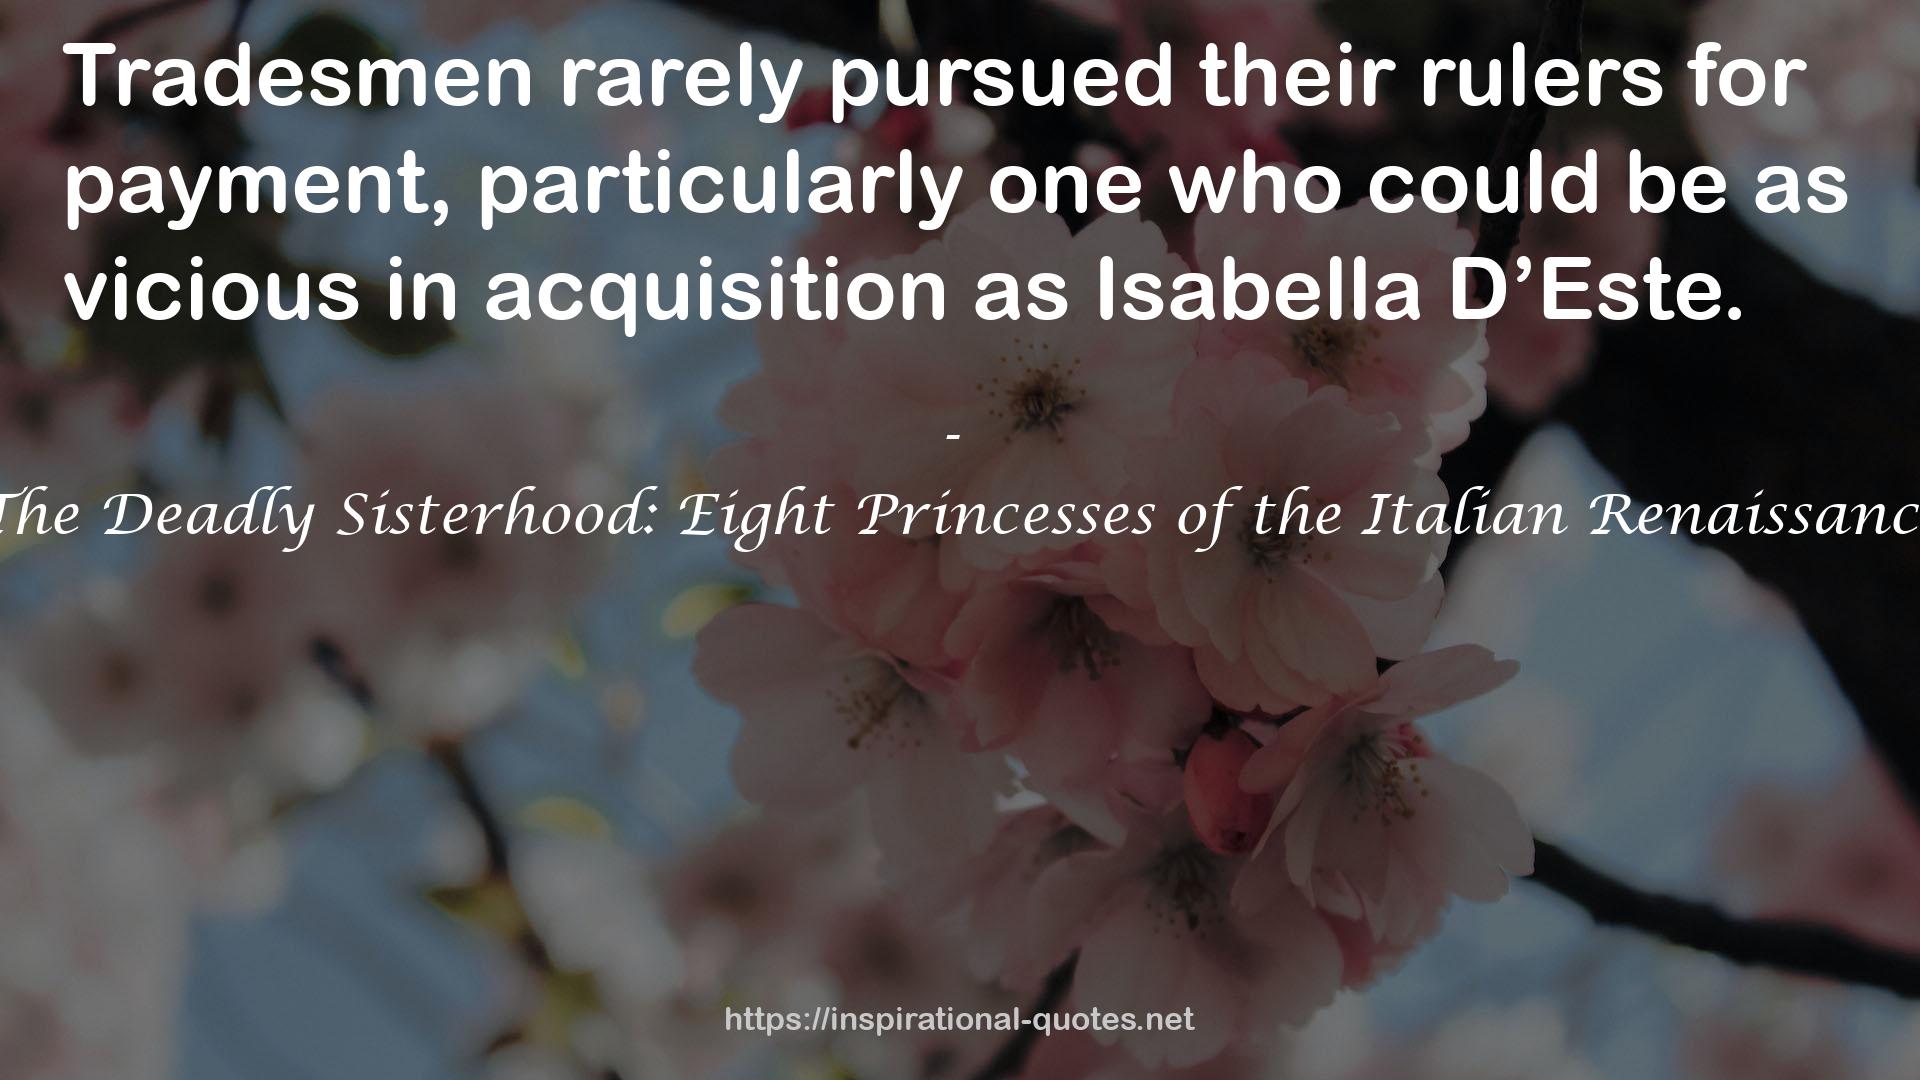 The Deadly Sisterhood: Eight Princesses of the Italian Renaissance QUOTES